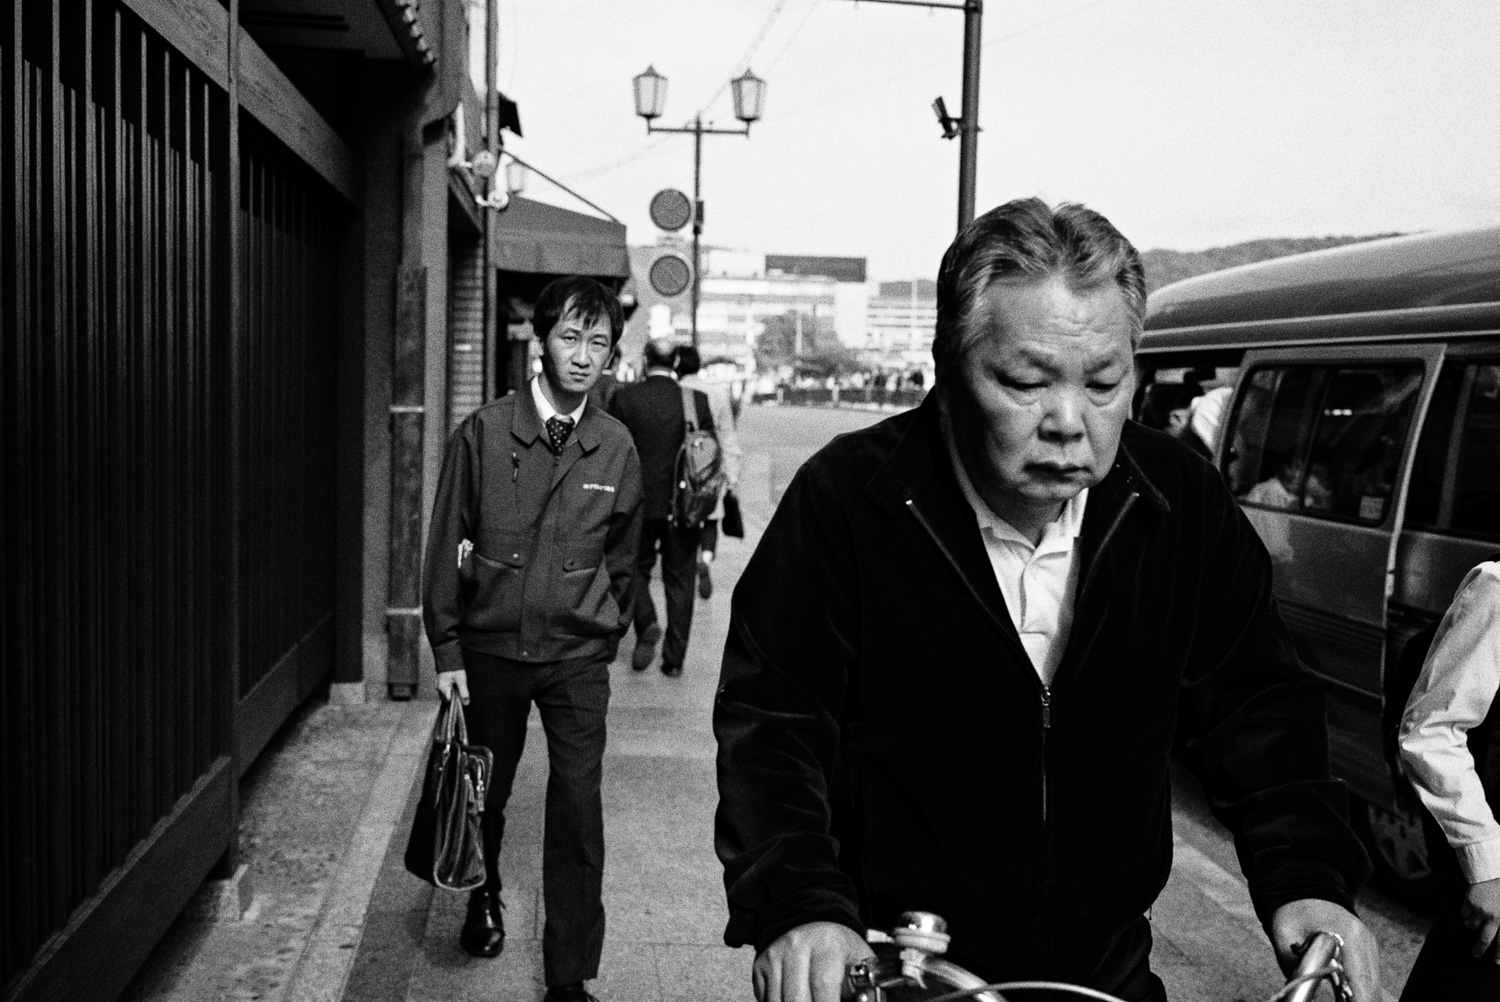 20170421_Japan_162332_Edit-Nick-Bedford,-Photographer-Black and White, Japan, Kyoto, Leica M Typ 240, Street Photography, Tokyo, Voigtlander 35mm F1.7 Ultron Asph, VSCO Film, West End Camera Club.jpg